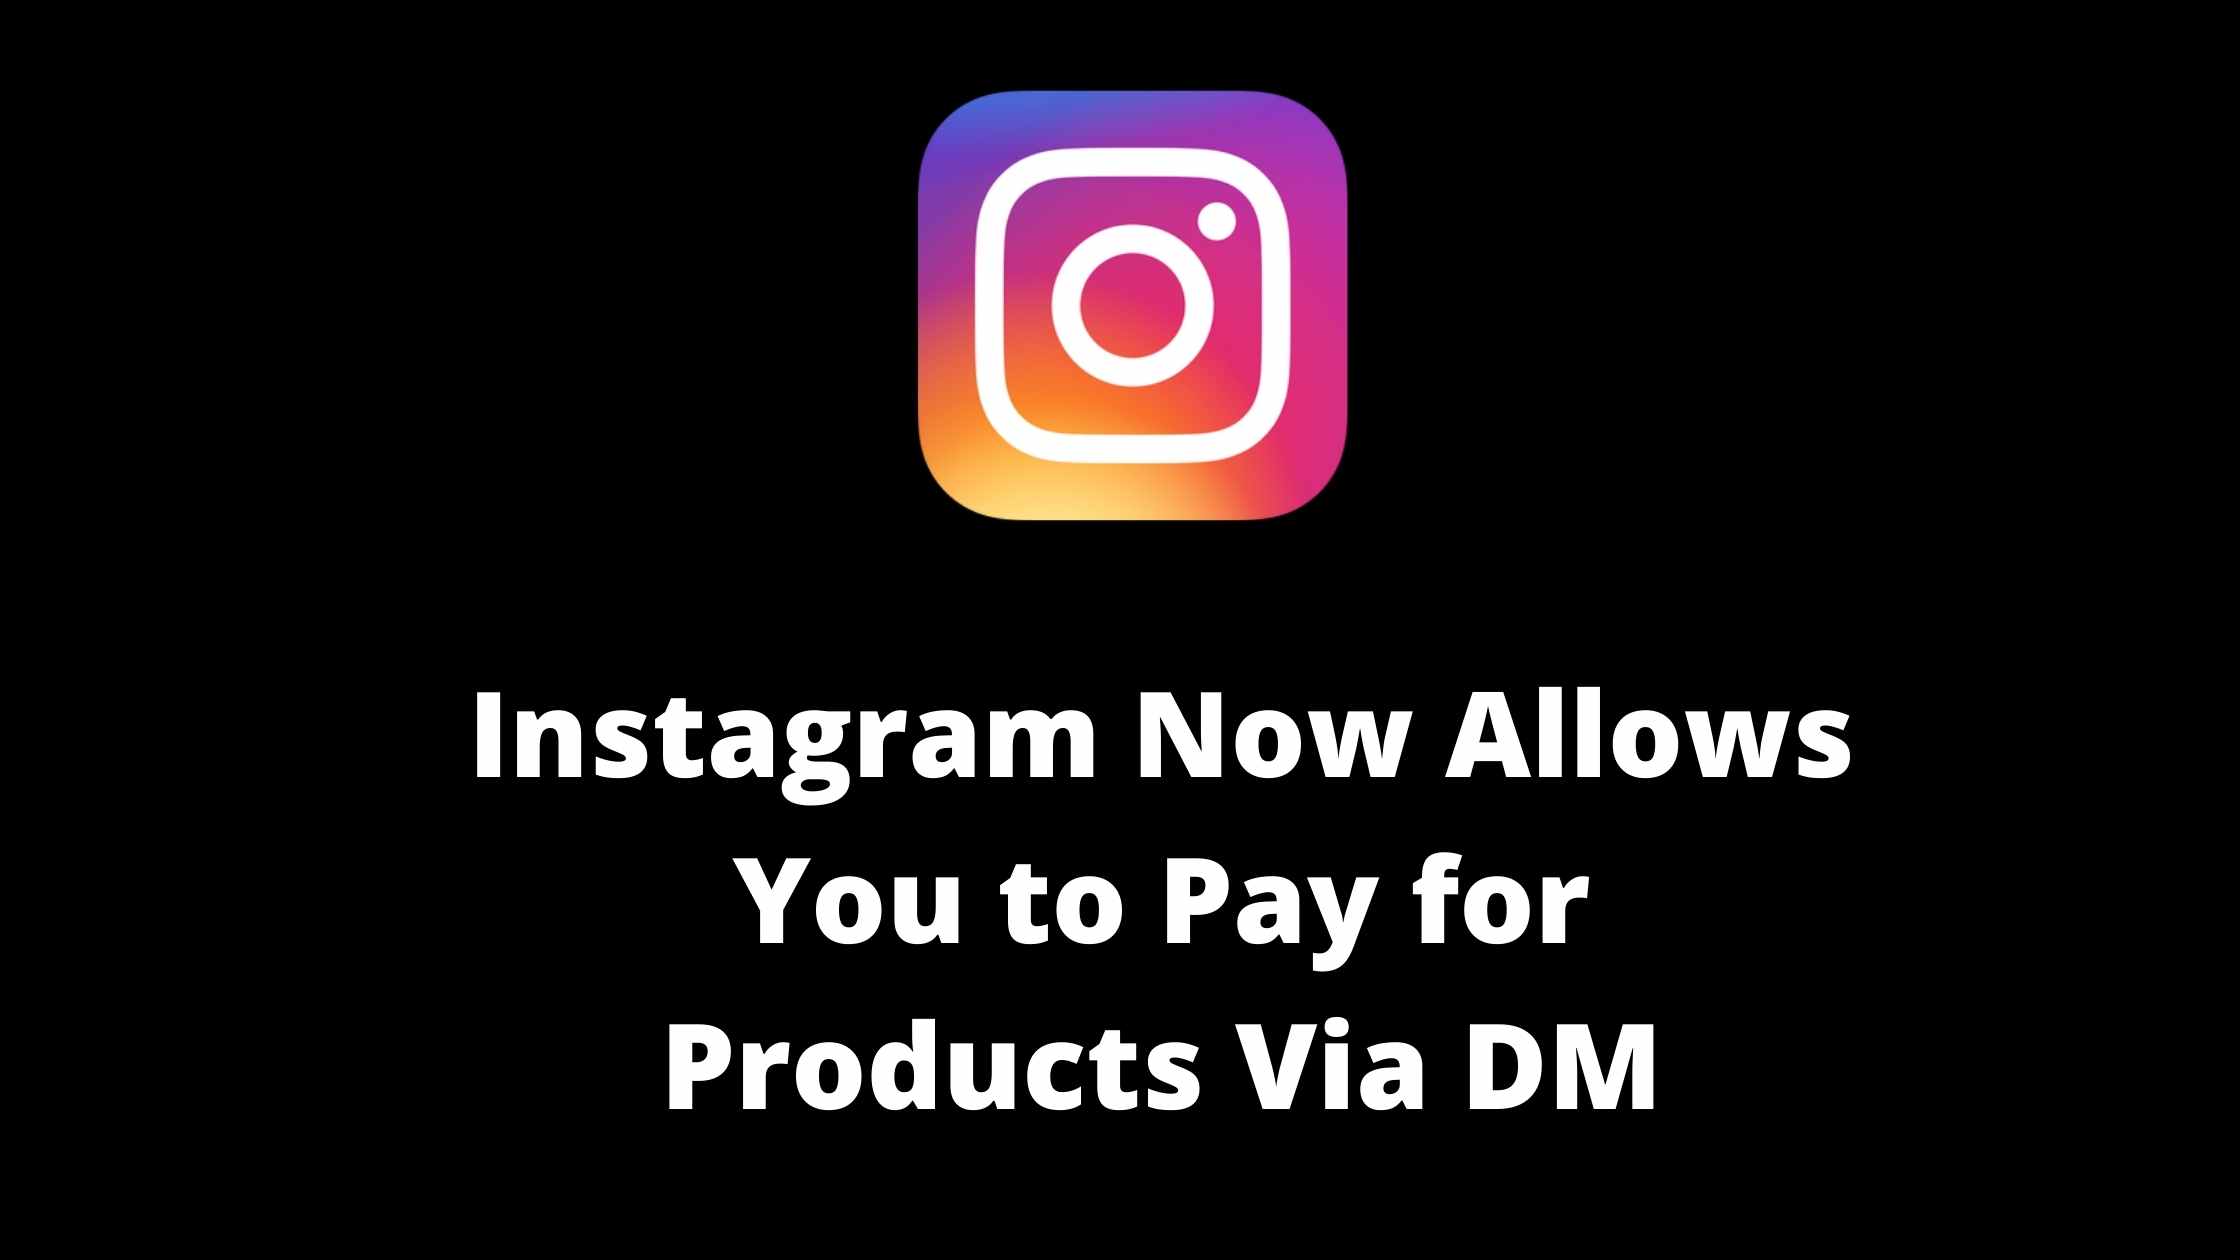 Instagram to allow payment via DM